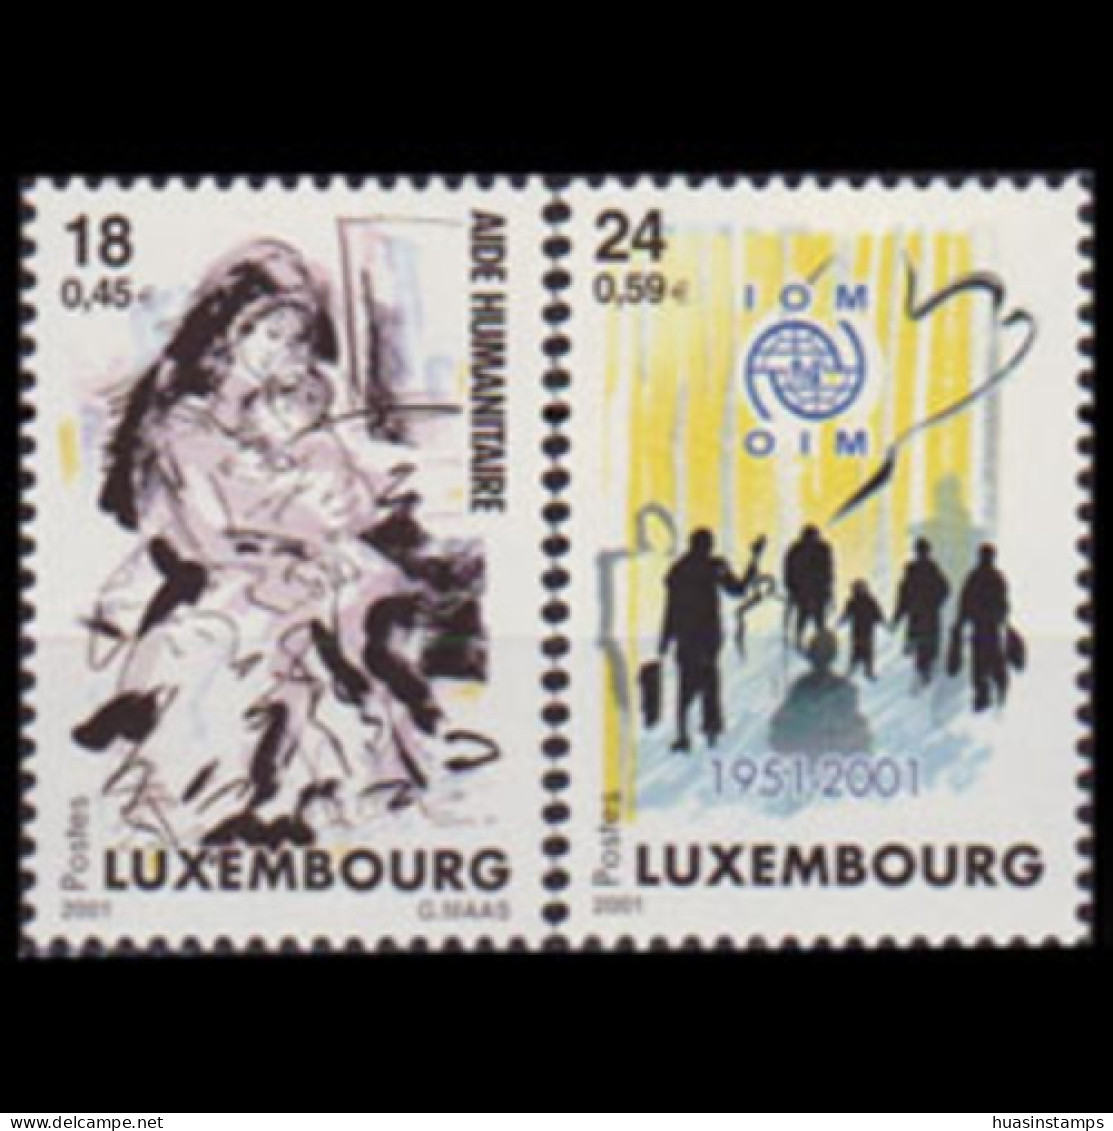 LUXEMBOURG 2001 - Scott# 1058-9 Humanitarians Set Of 2 MNH - Nuevos